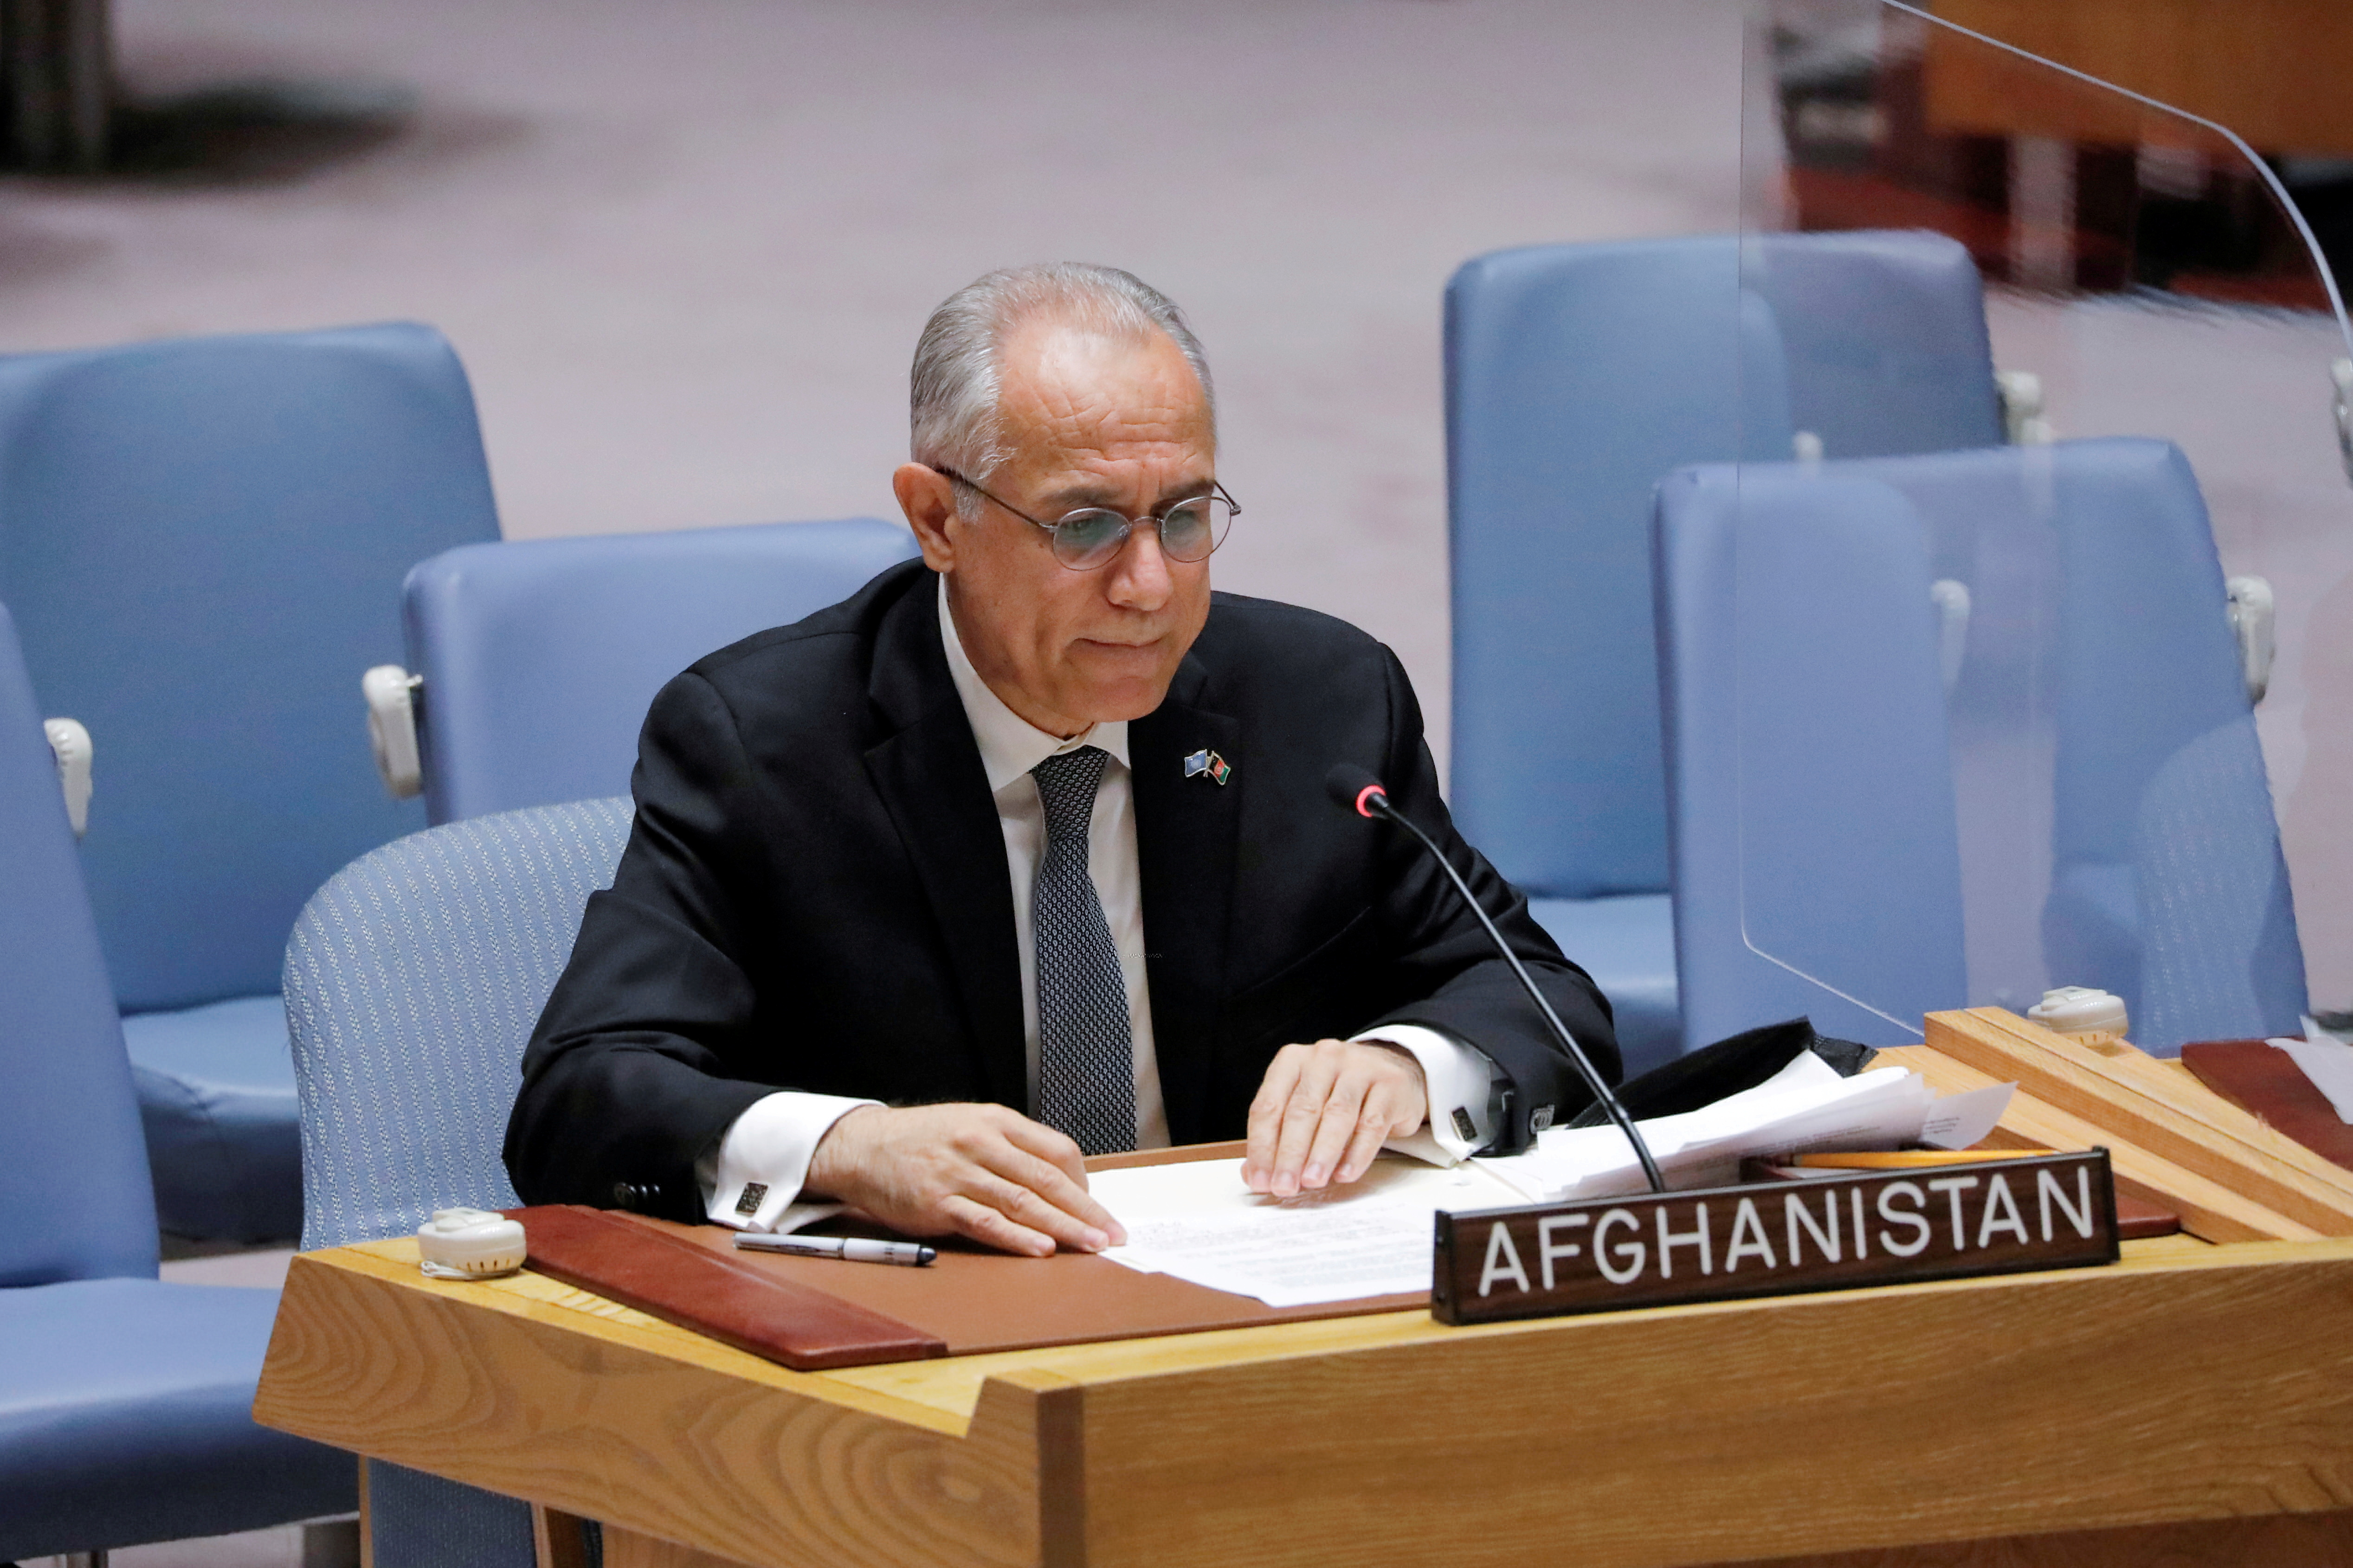 FILE PHOTO: Afghanistan's U.N. ambassador Ghulam Isaczai addresses the United Nations Security Council